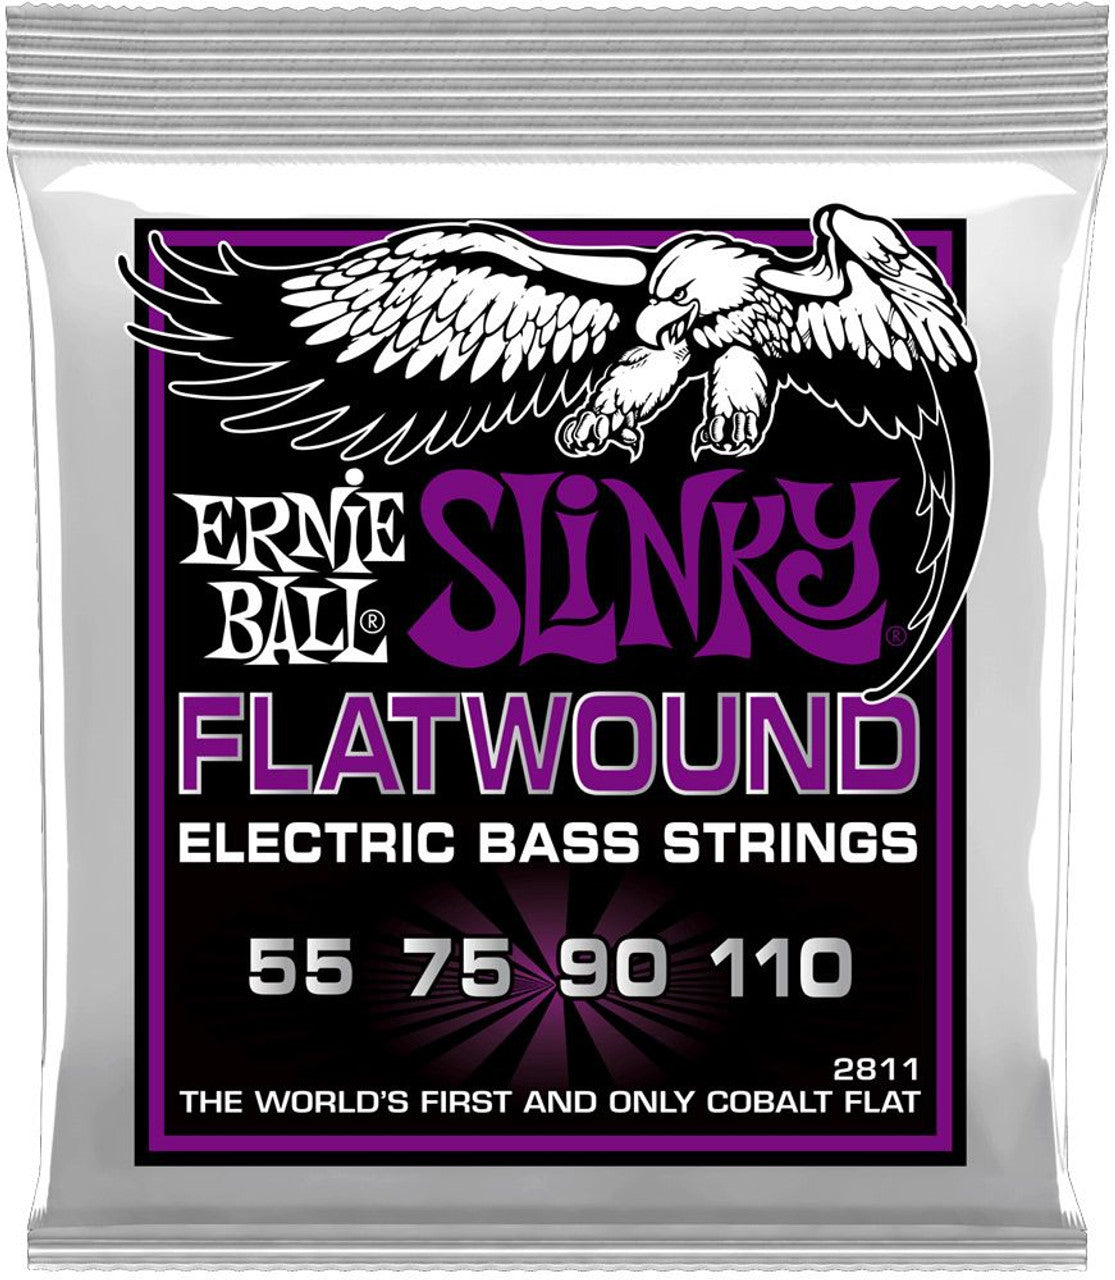 2811 Ernie Ball Slinky Cobalt Flatwound Electric Bass Strings